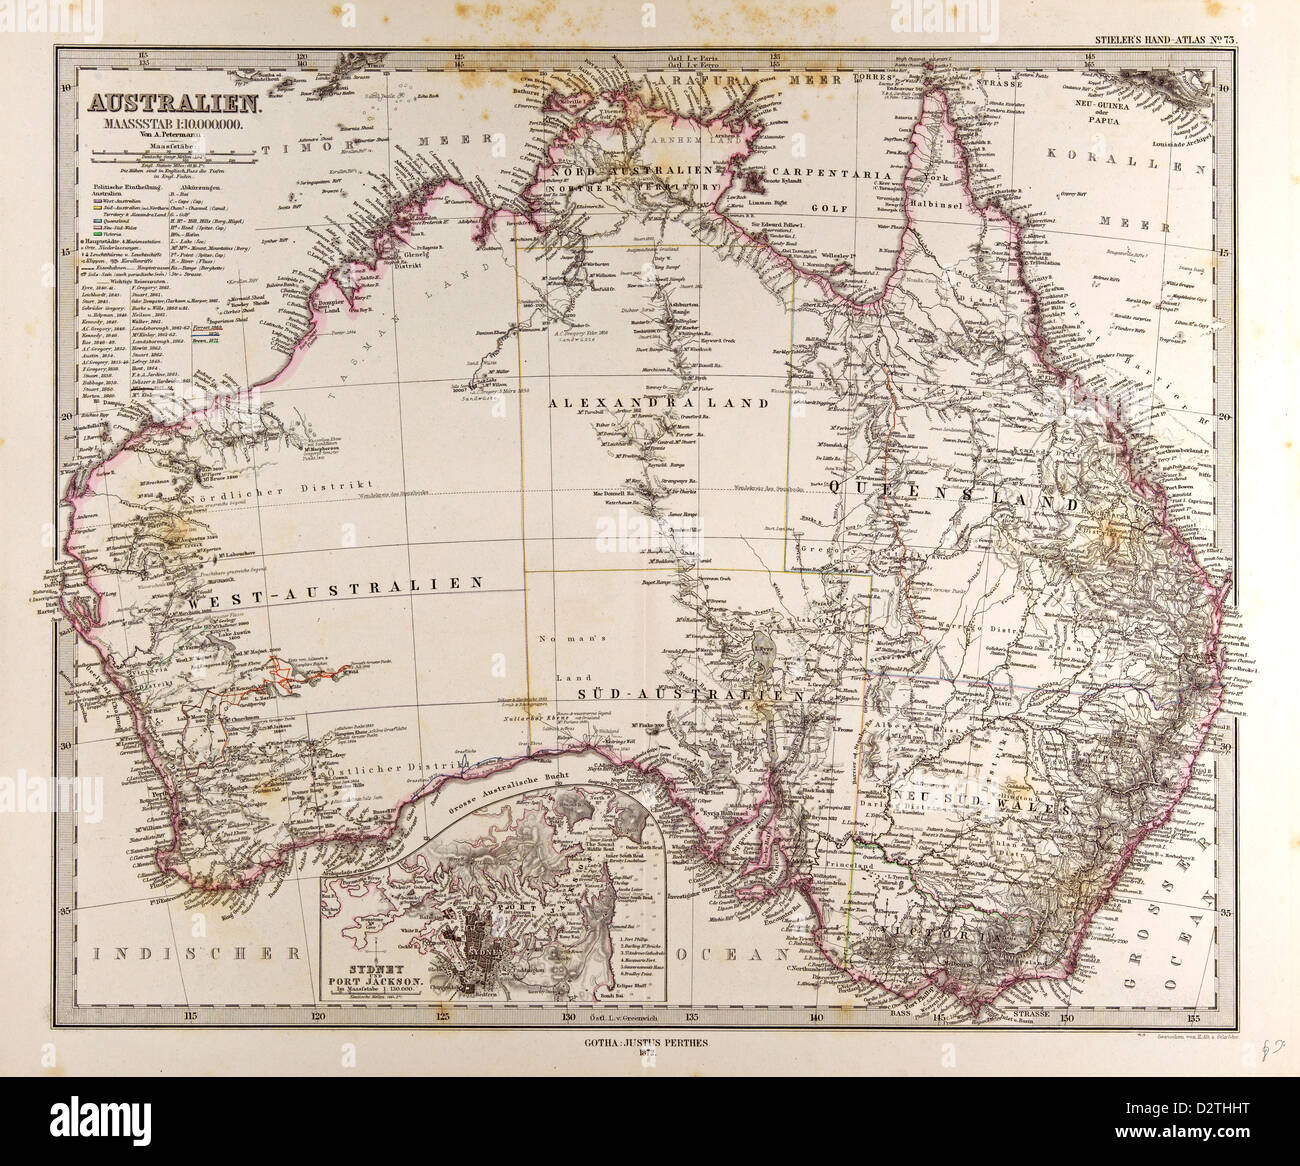 Australia mapa Gotha Justus Perthes Foto de stock